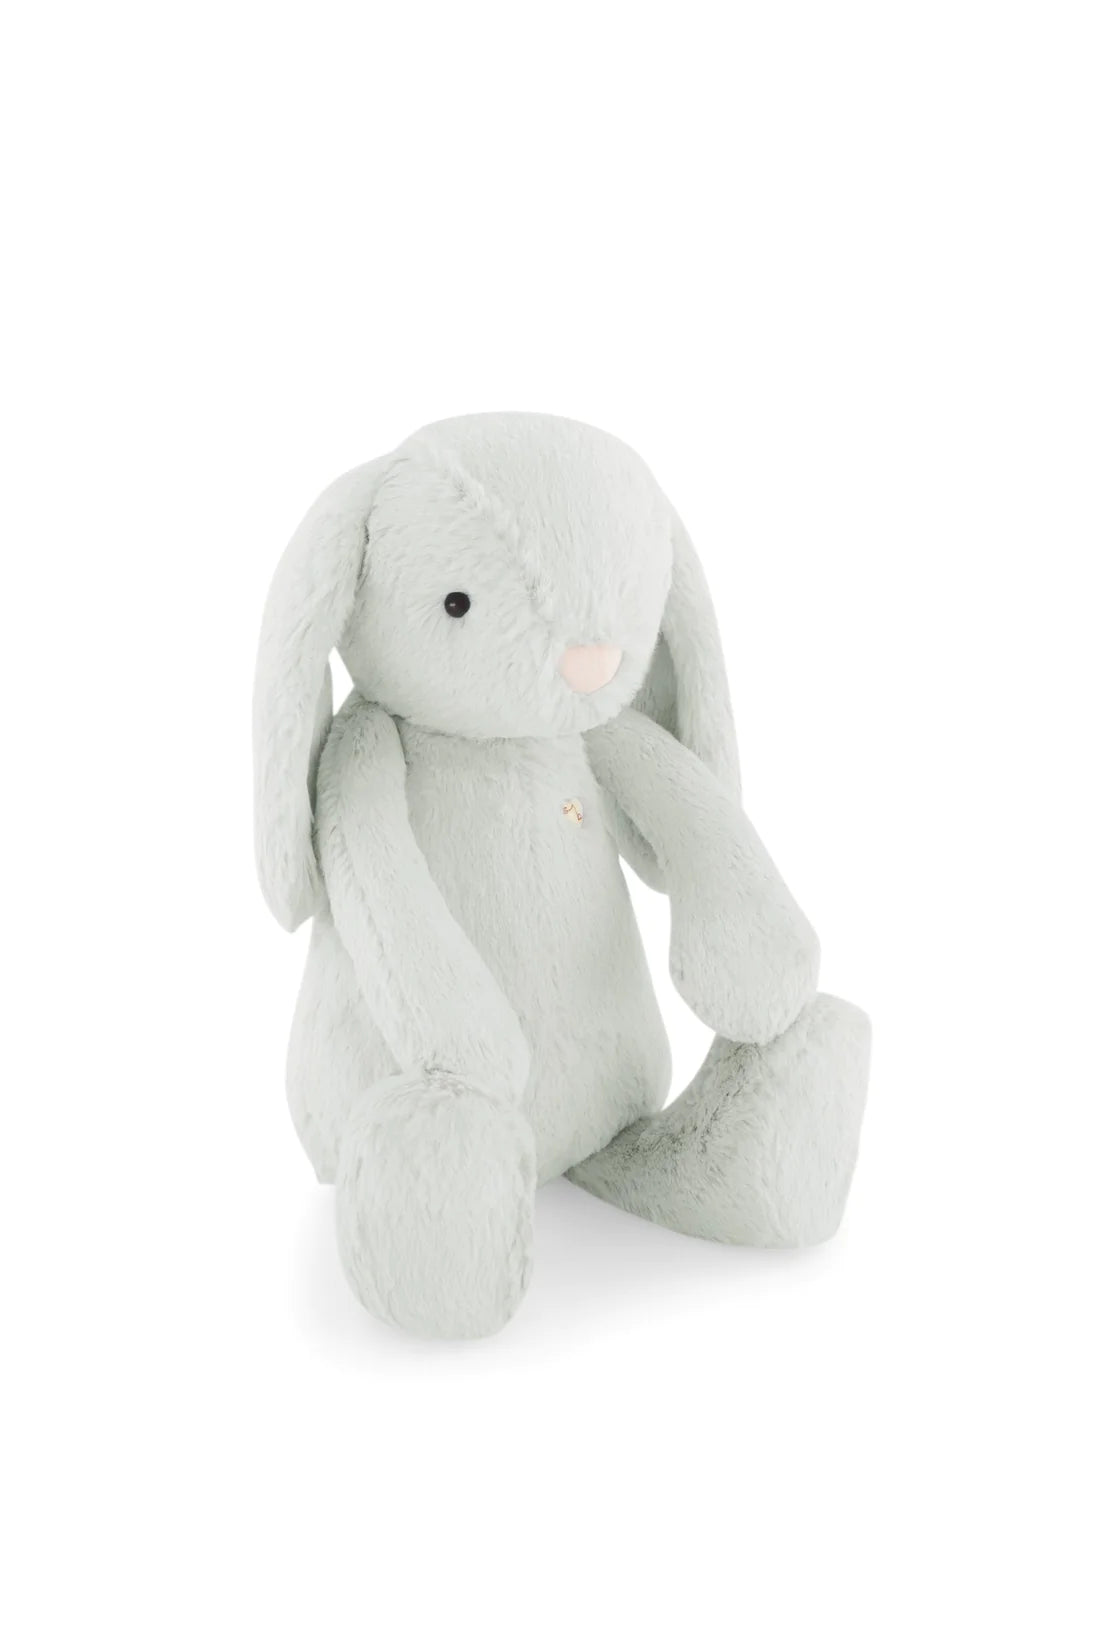 Snuggle Bunnies - Penelope the Bunny - Willow | Jamie Kay